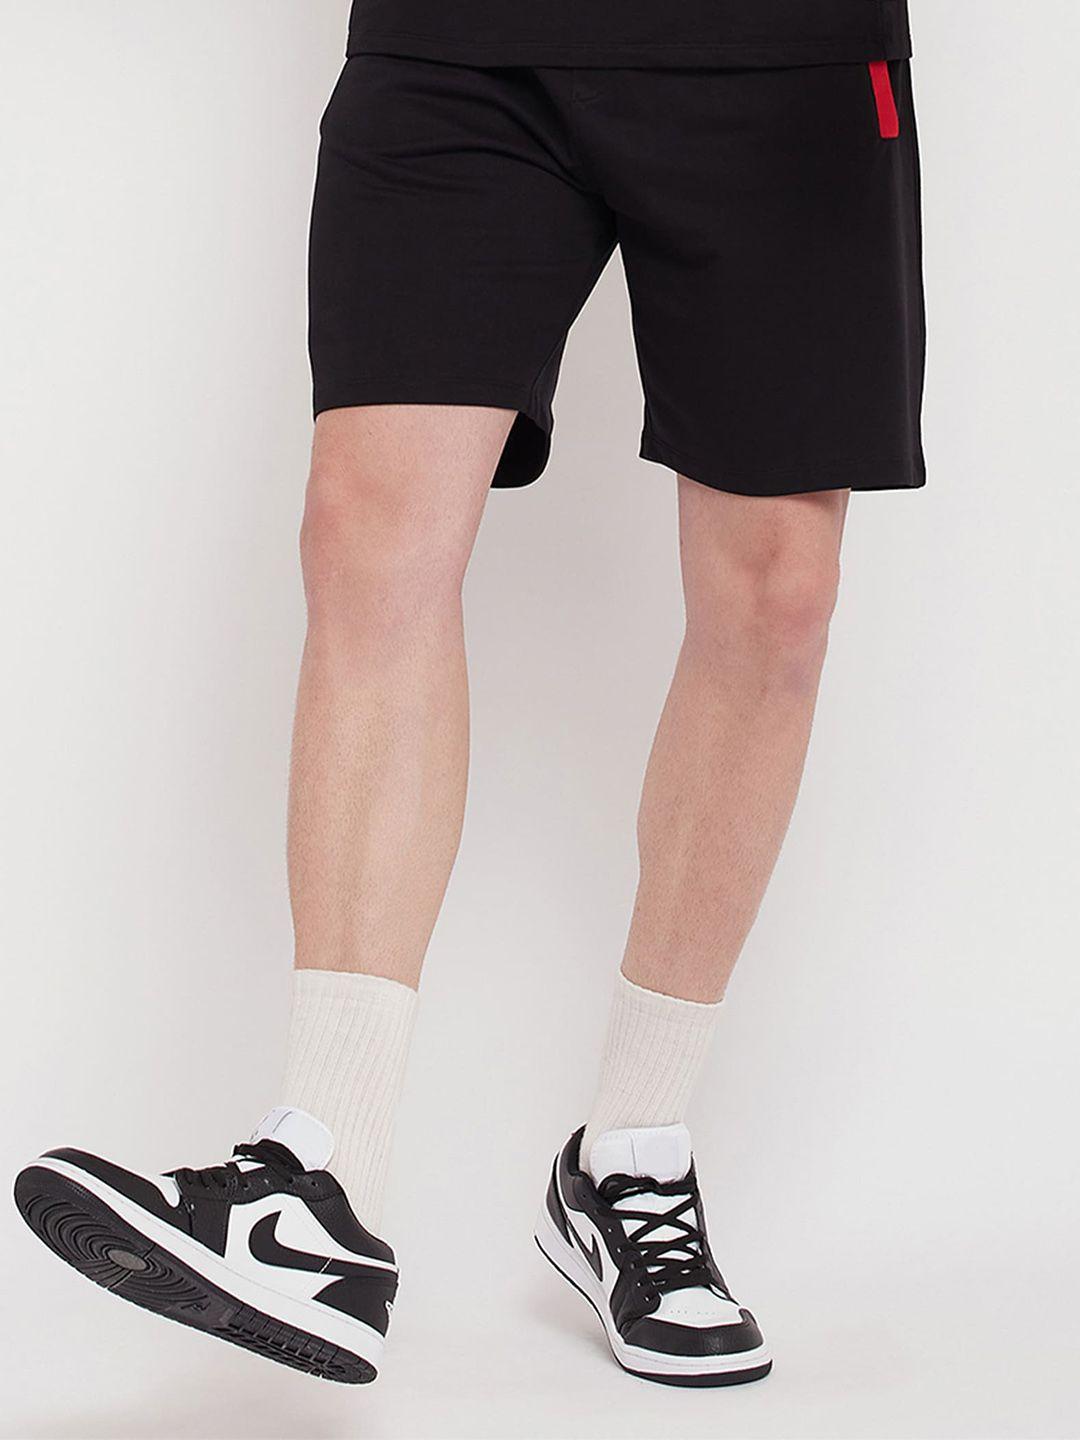 edrio mid-rise cotton shorts